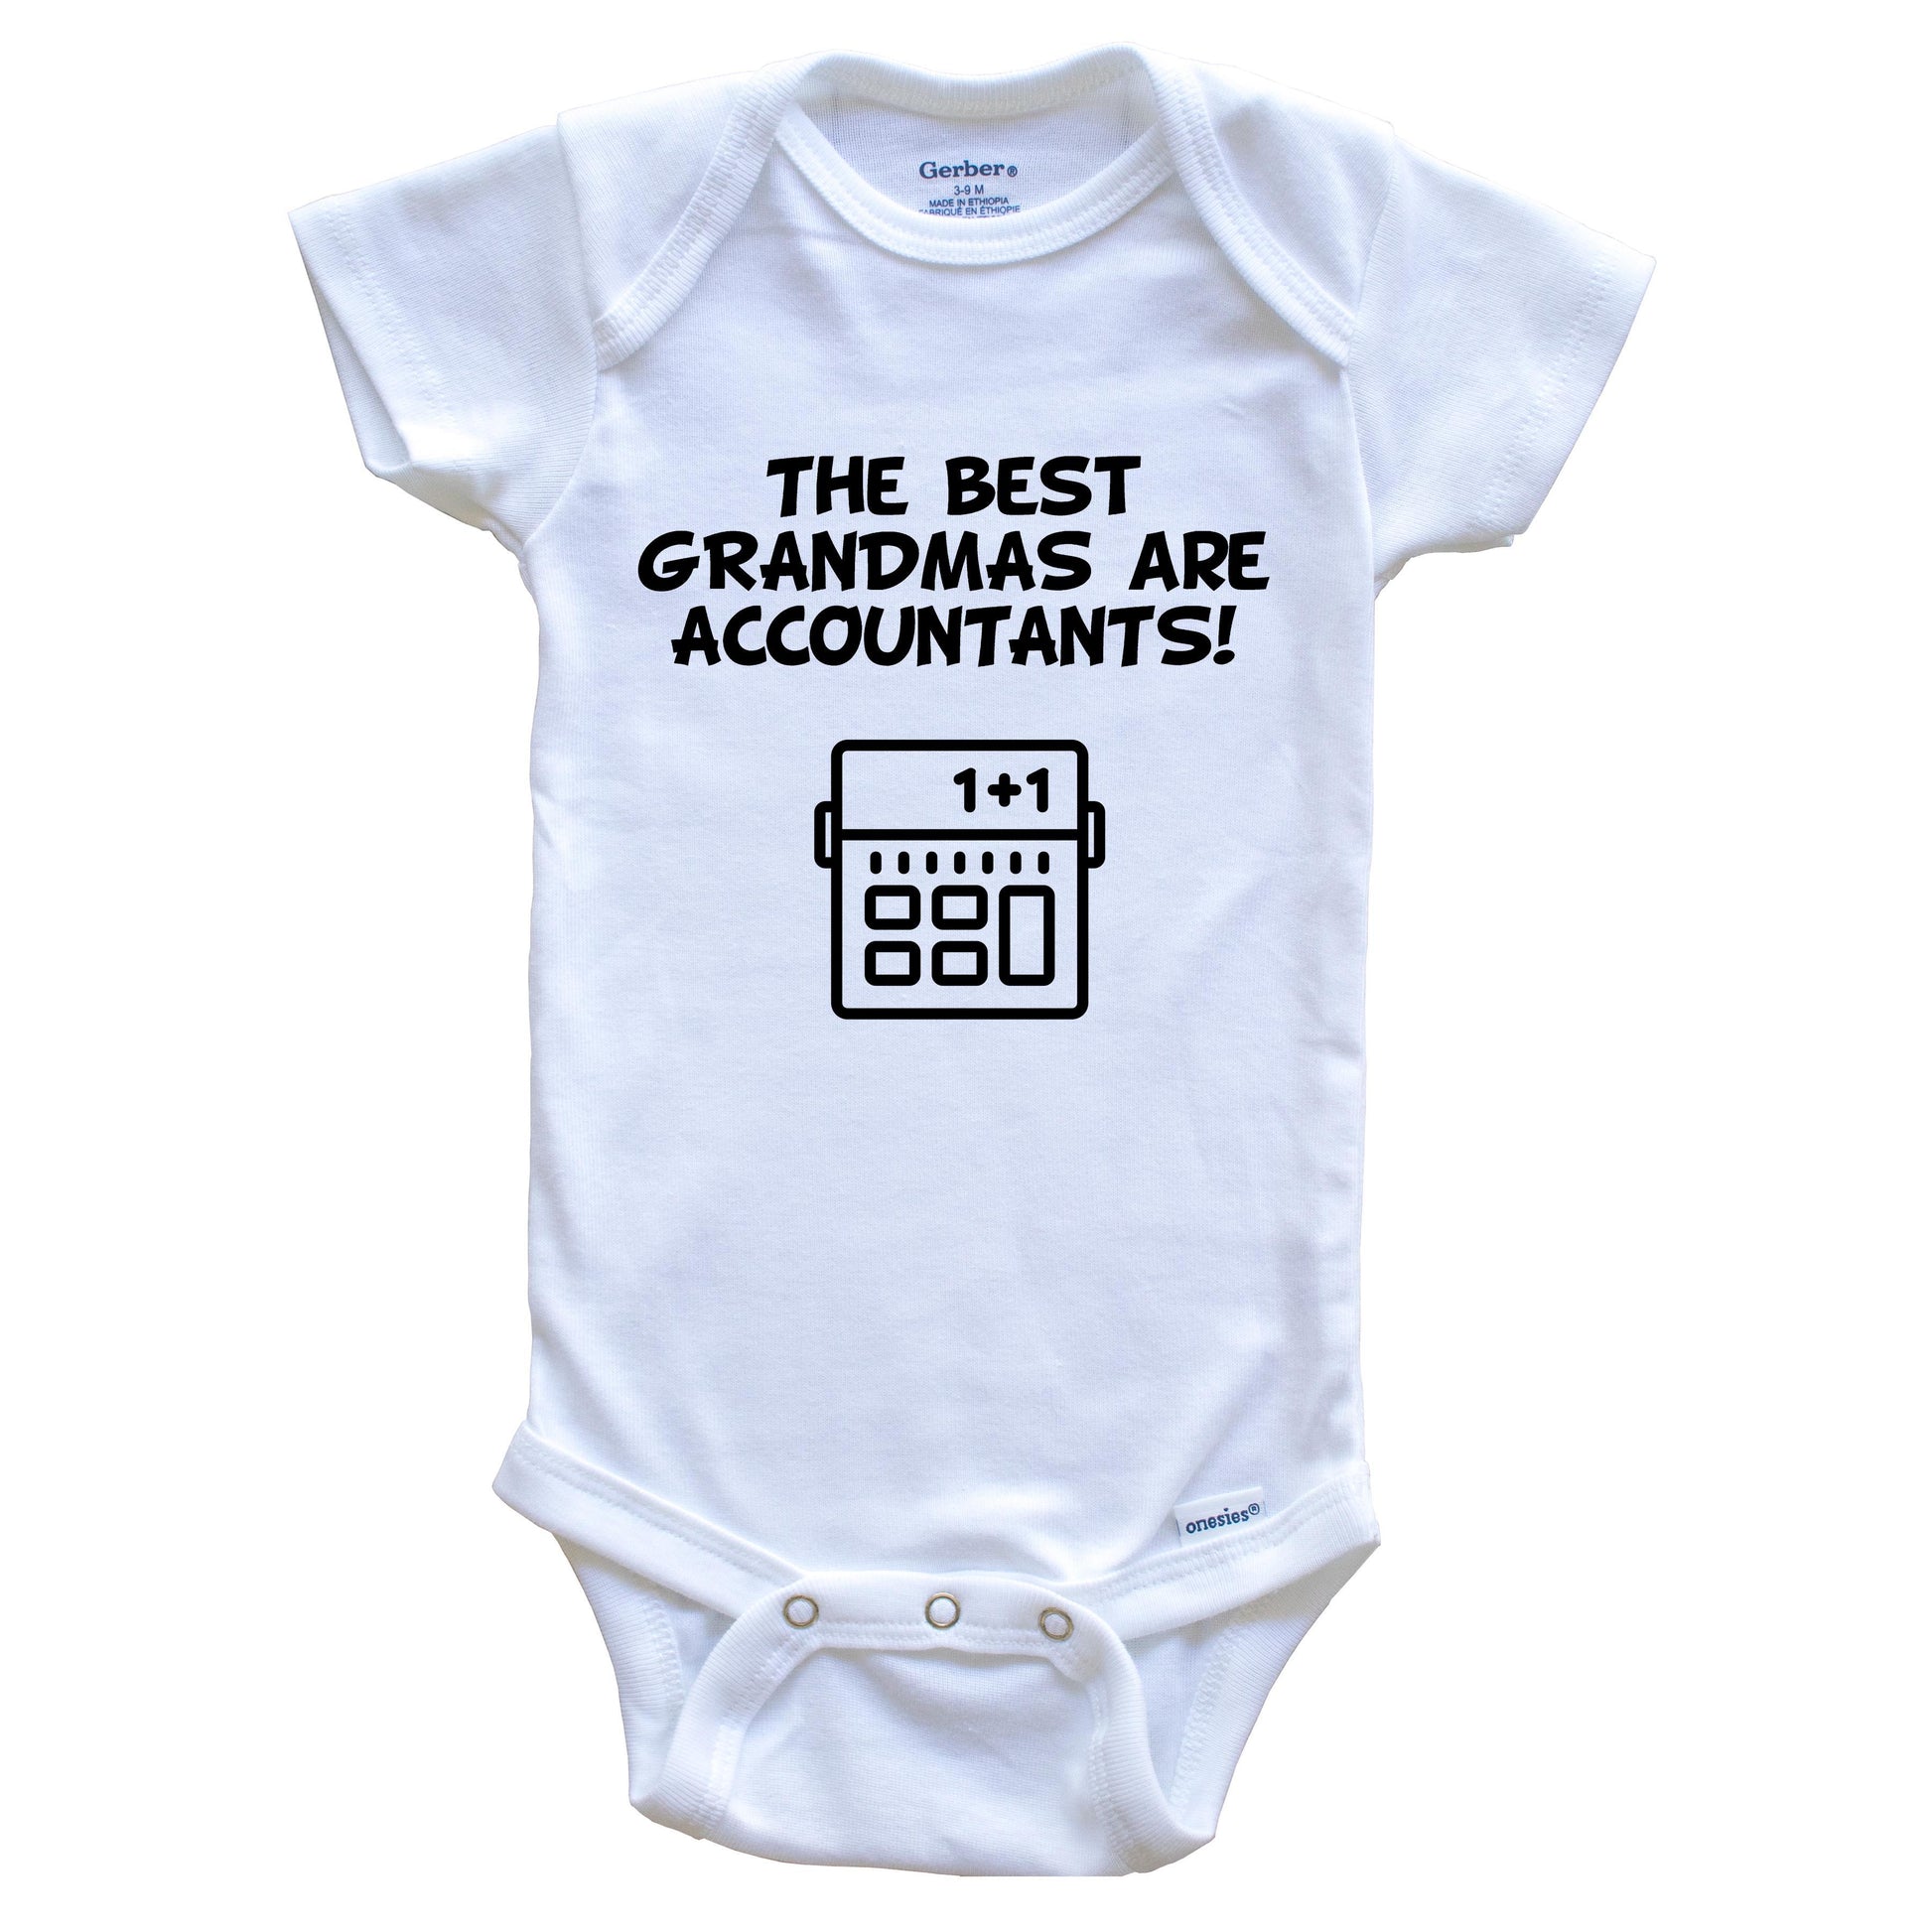 The Best Grandmas Are Accountants Funny Grandchild Baby Onesie